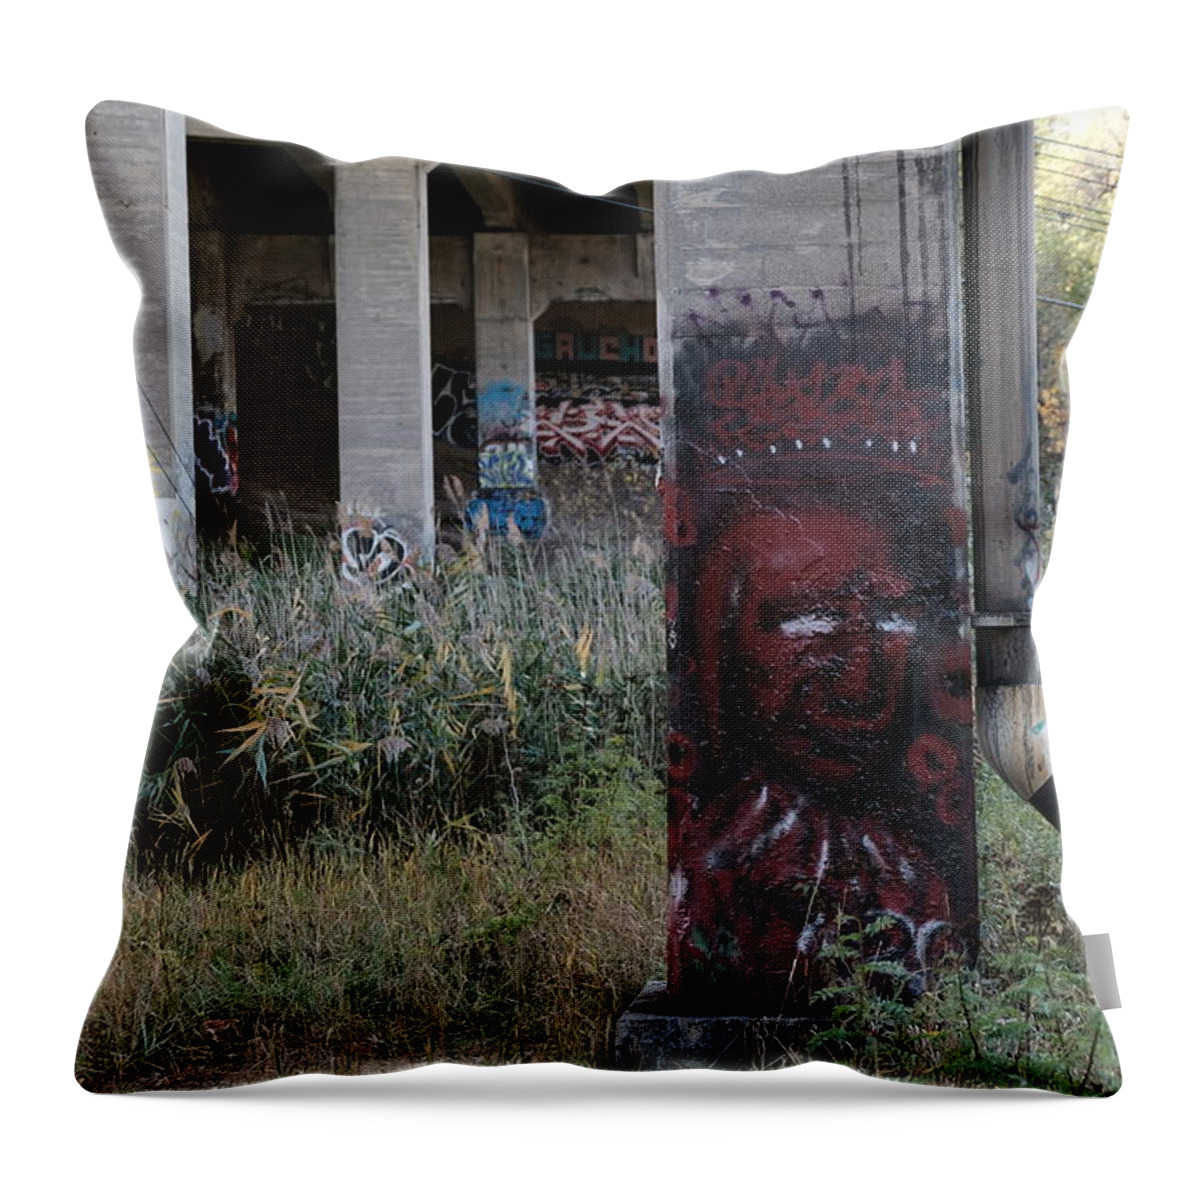 Graffiti Throw Pillow featuring the photograph I spent autumn under bridges VI by Kreddible Trout